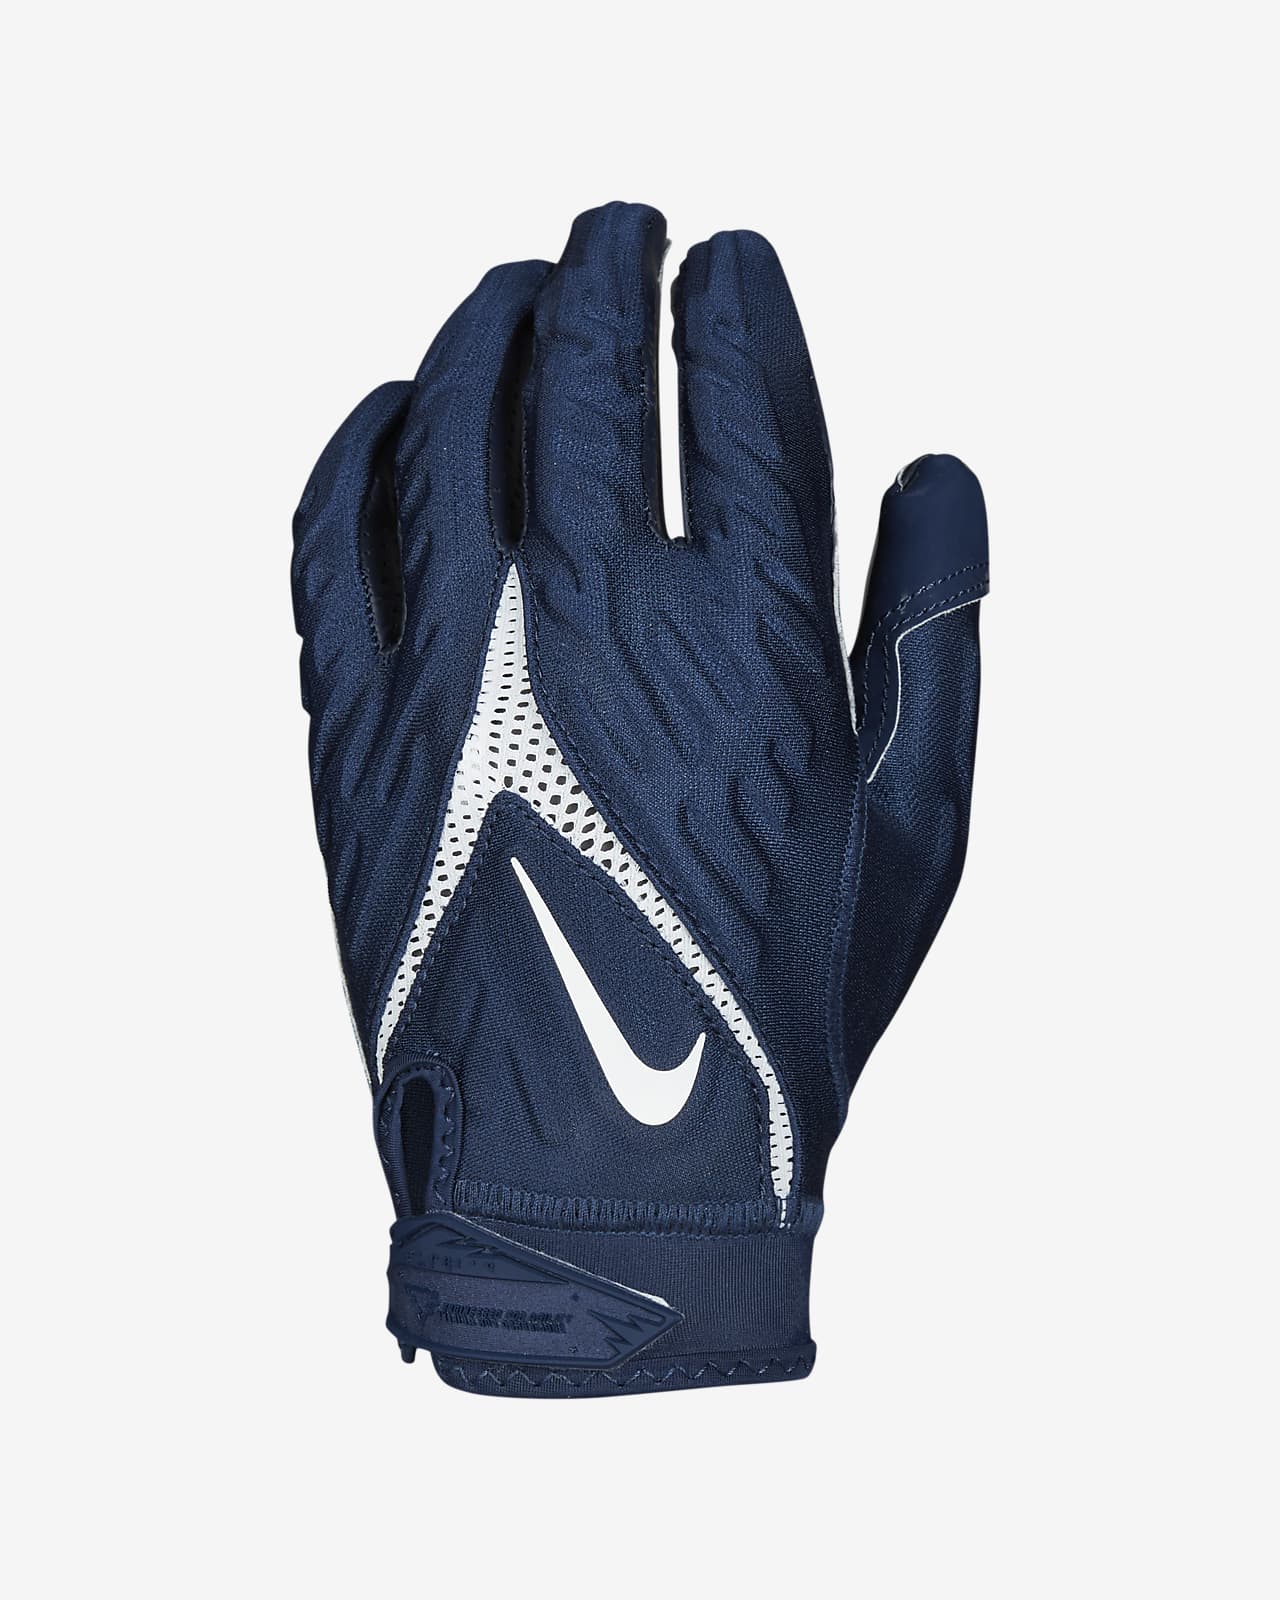 Nike Football Gloves (1 Pair).